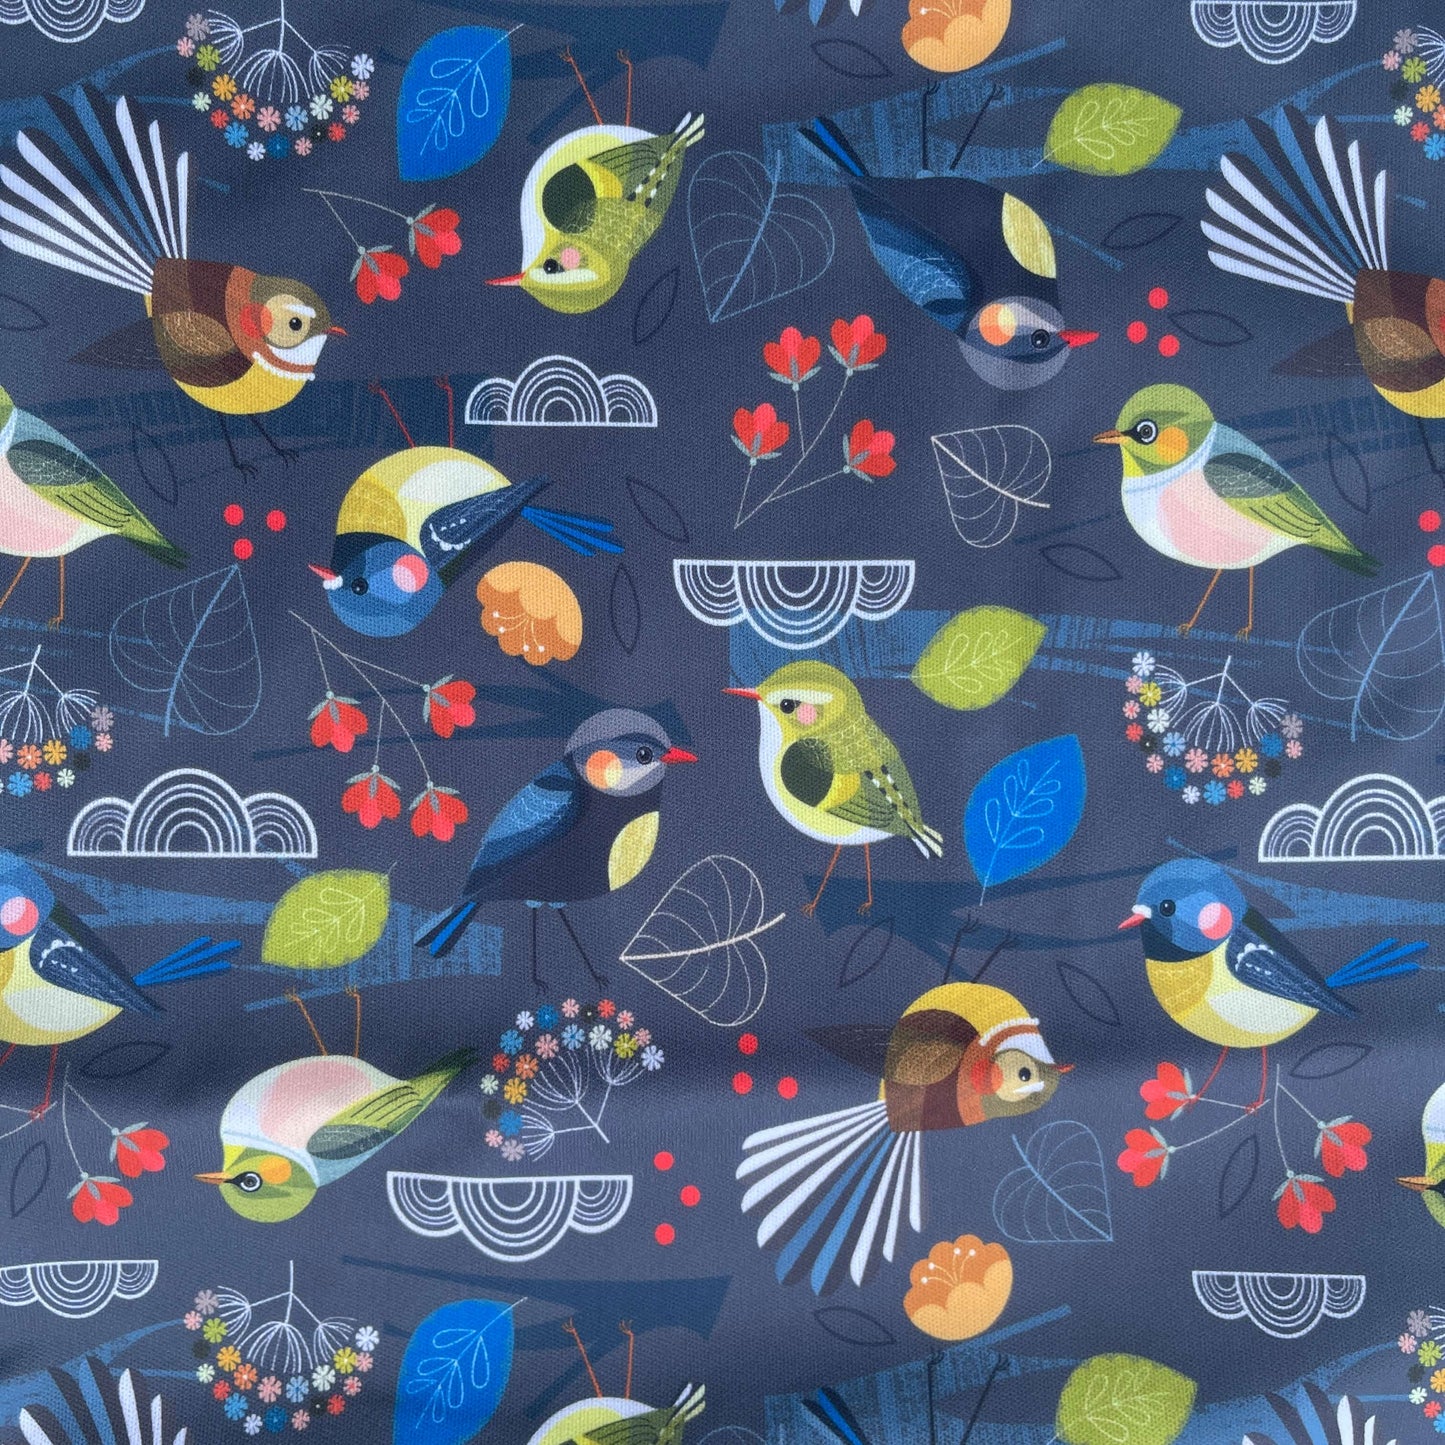 Fabric with native New Zealand bird print.